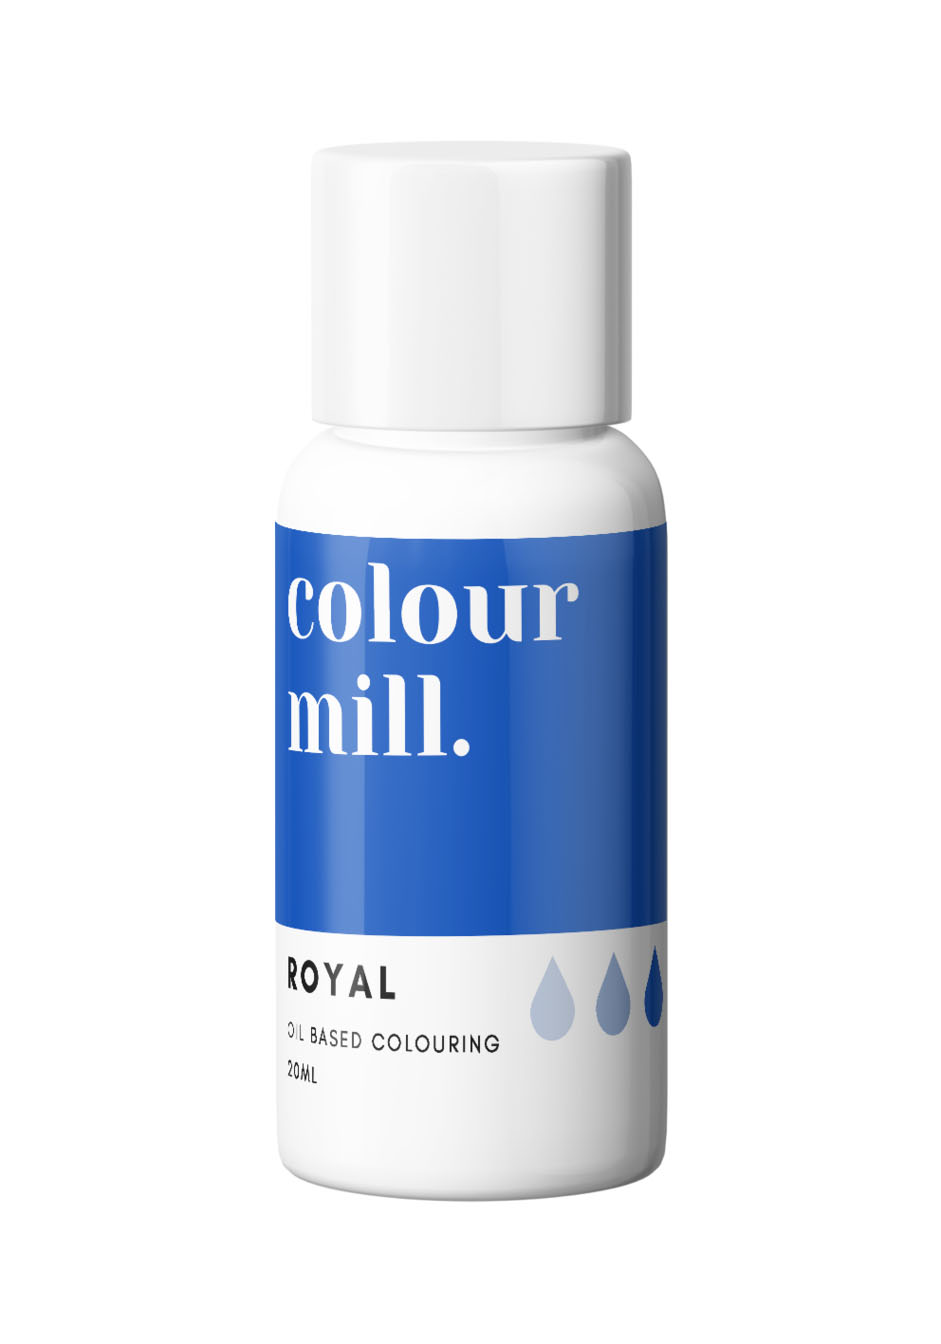 Colour Mill Royal Colouring 20ml